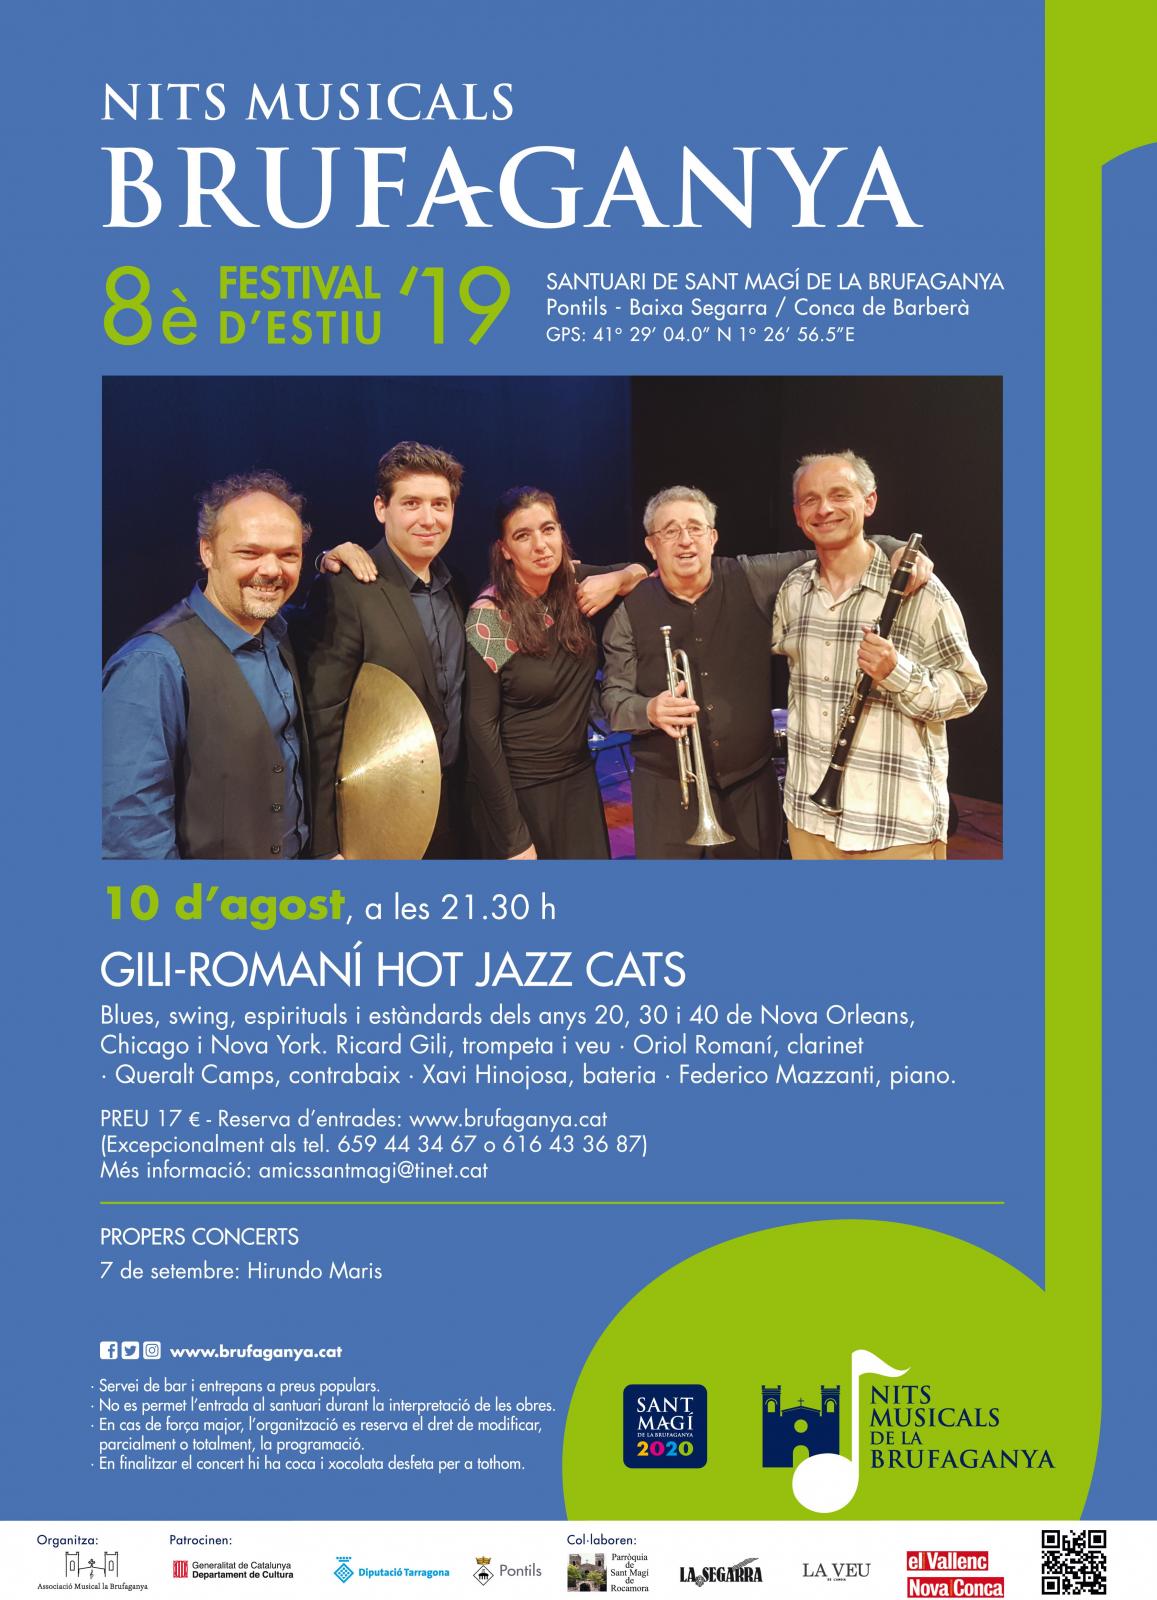 GILI-ROMANÍ HOT JAZZ CATS (Nits Musicals de la Brufaganya)